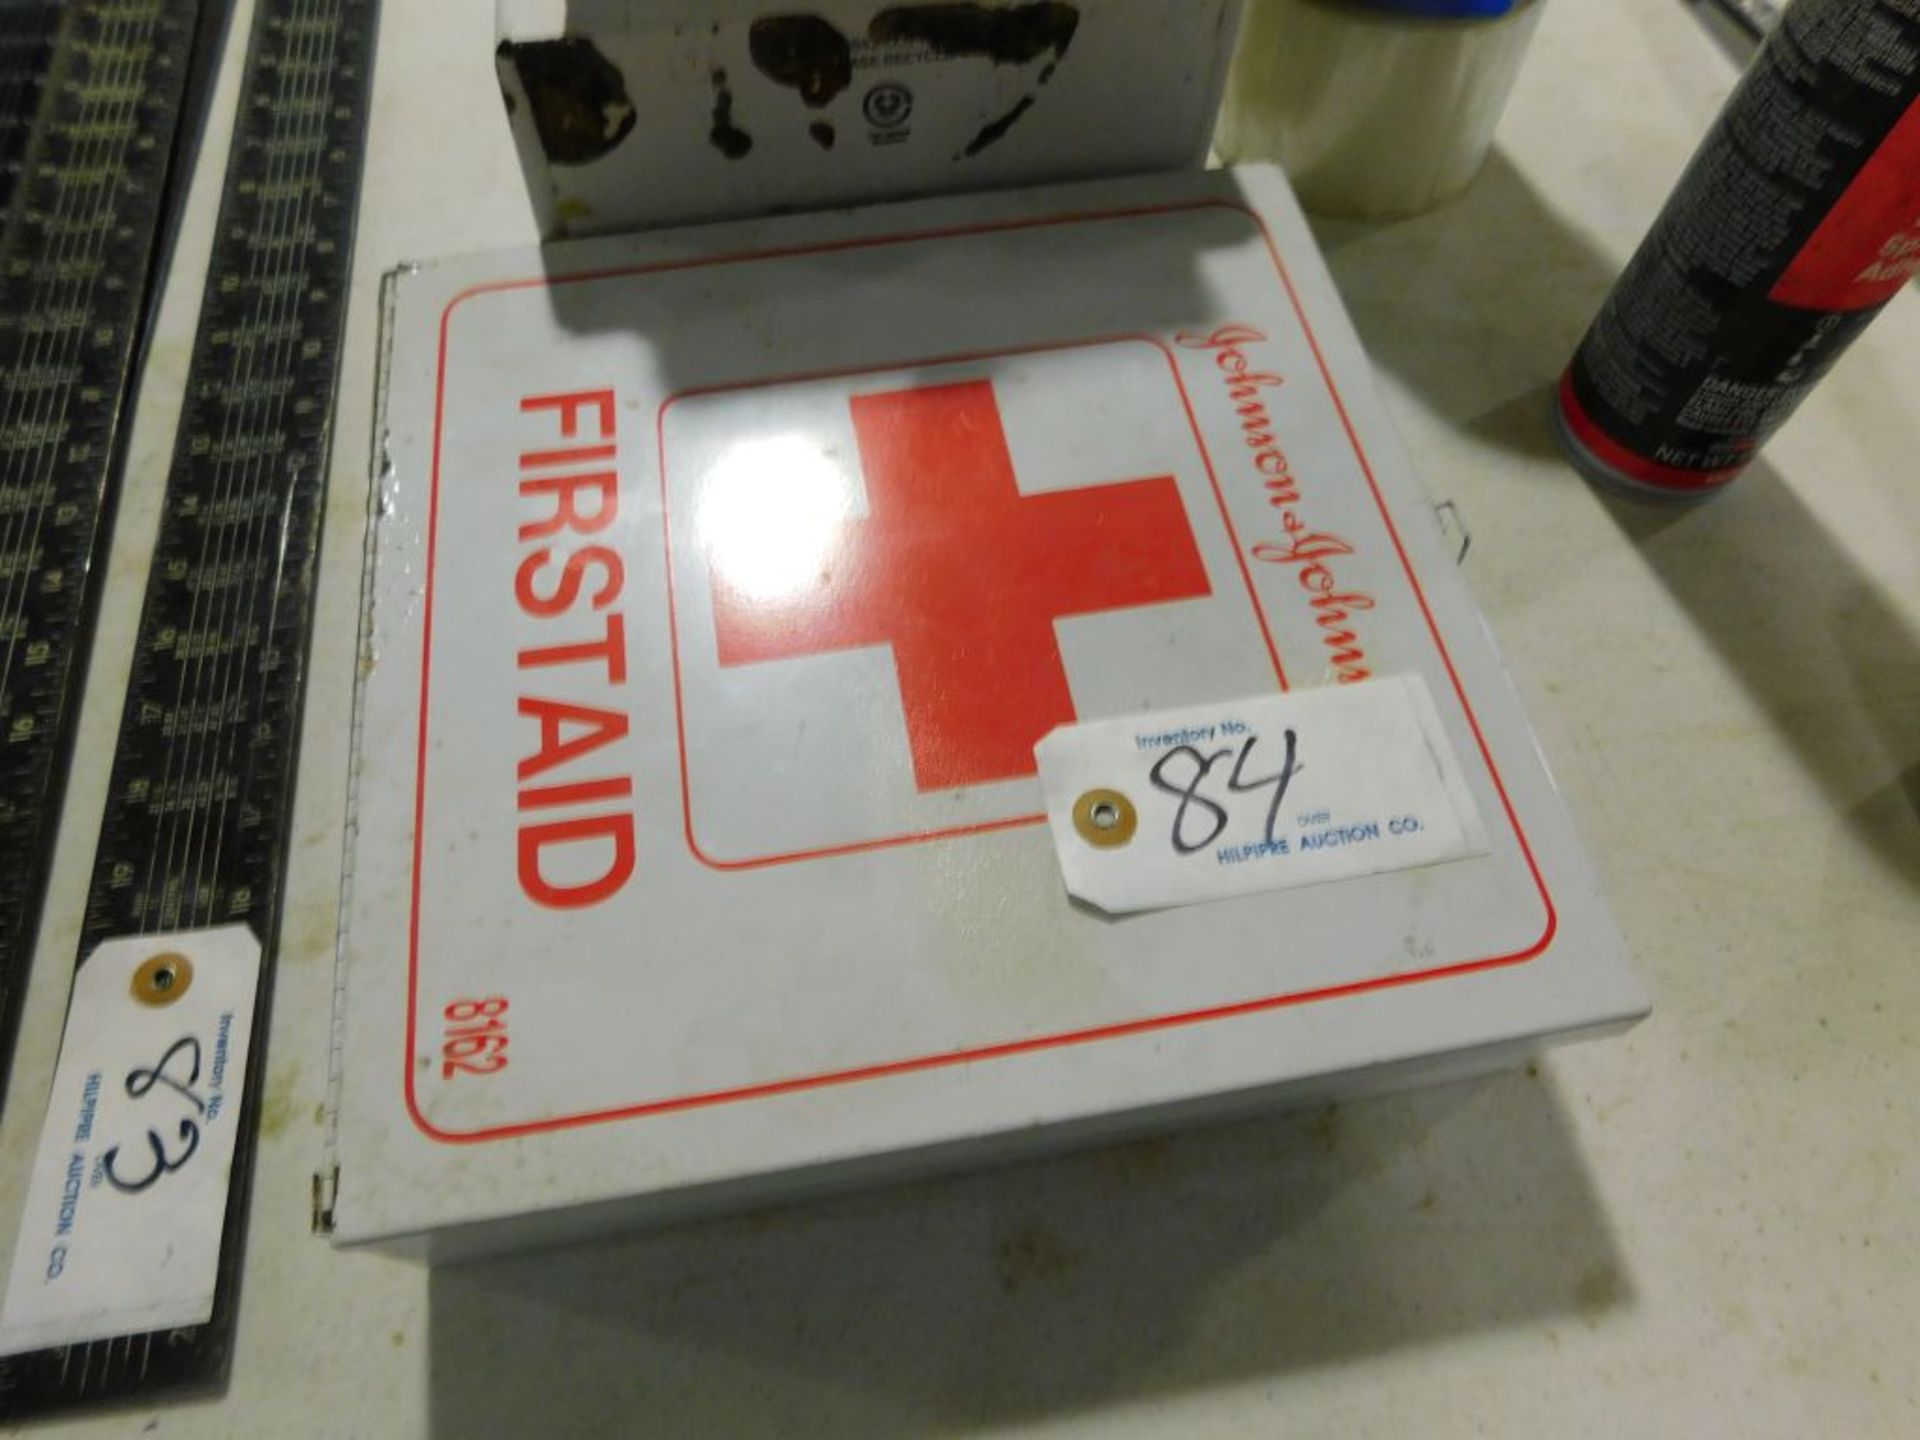 1st Aid kit.